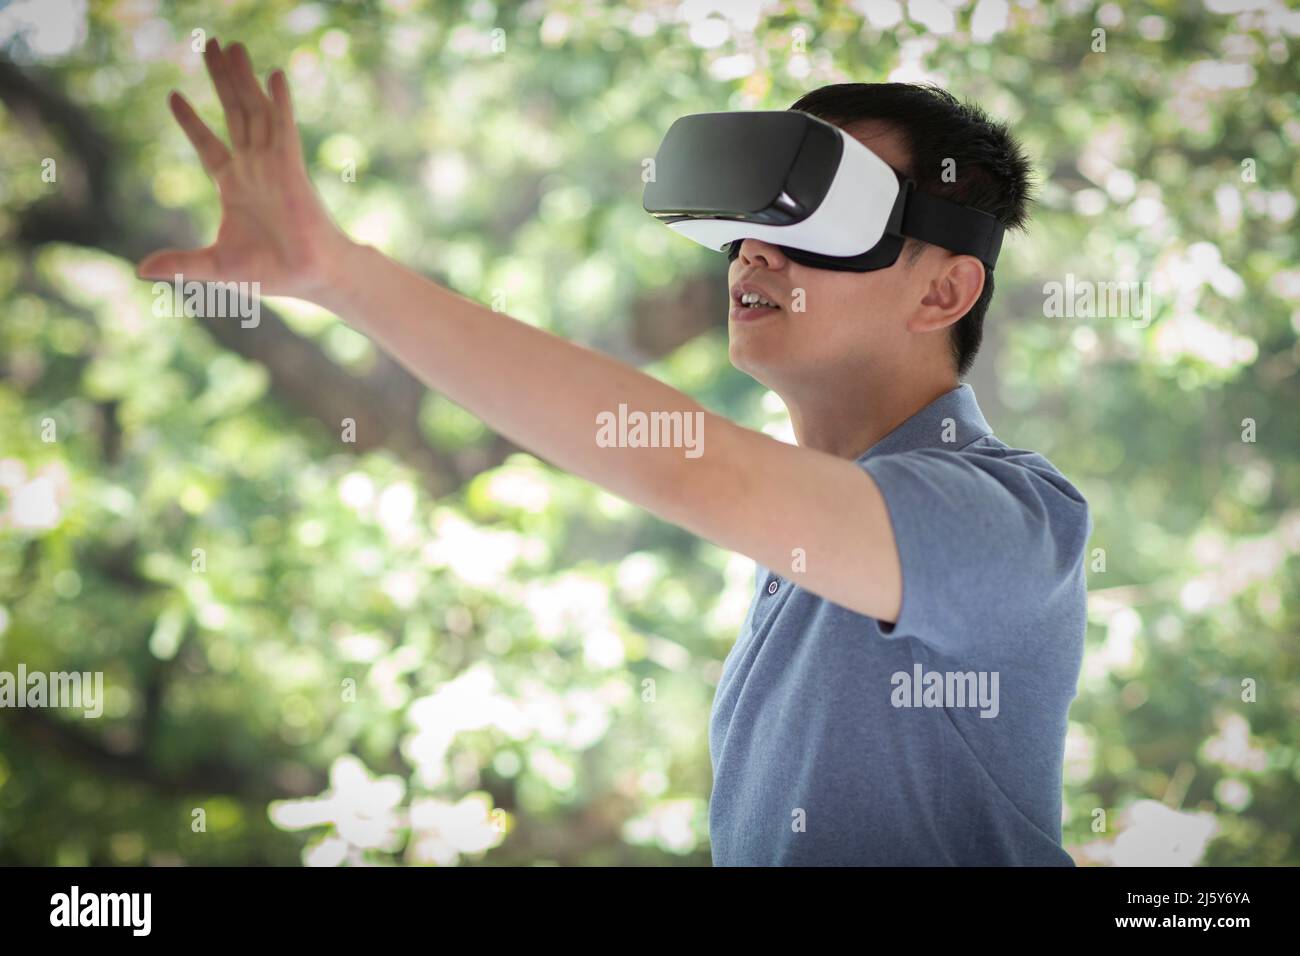 Man gesturing, using VR headset Stock Photo